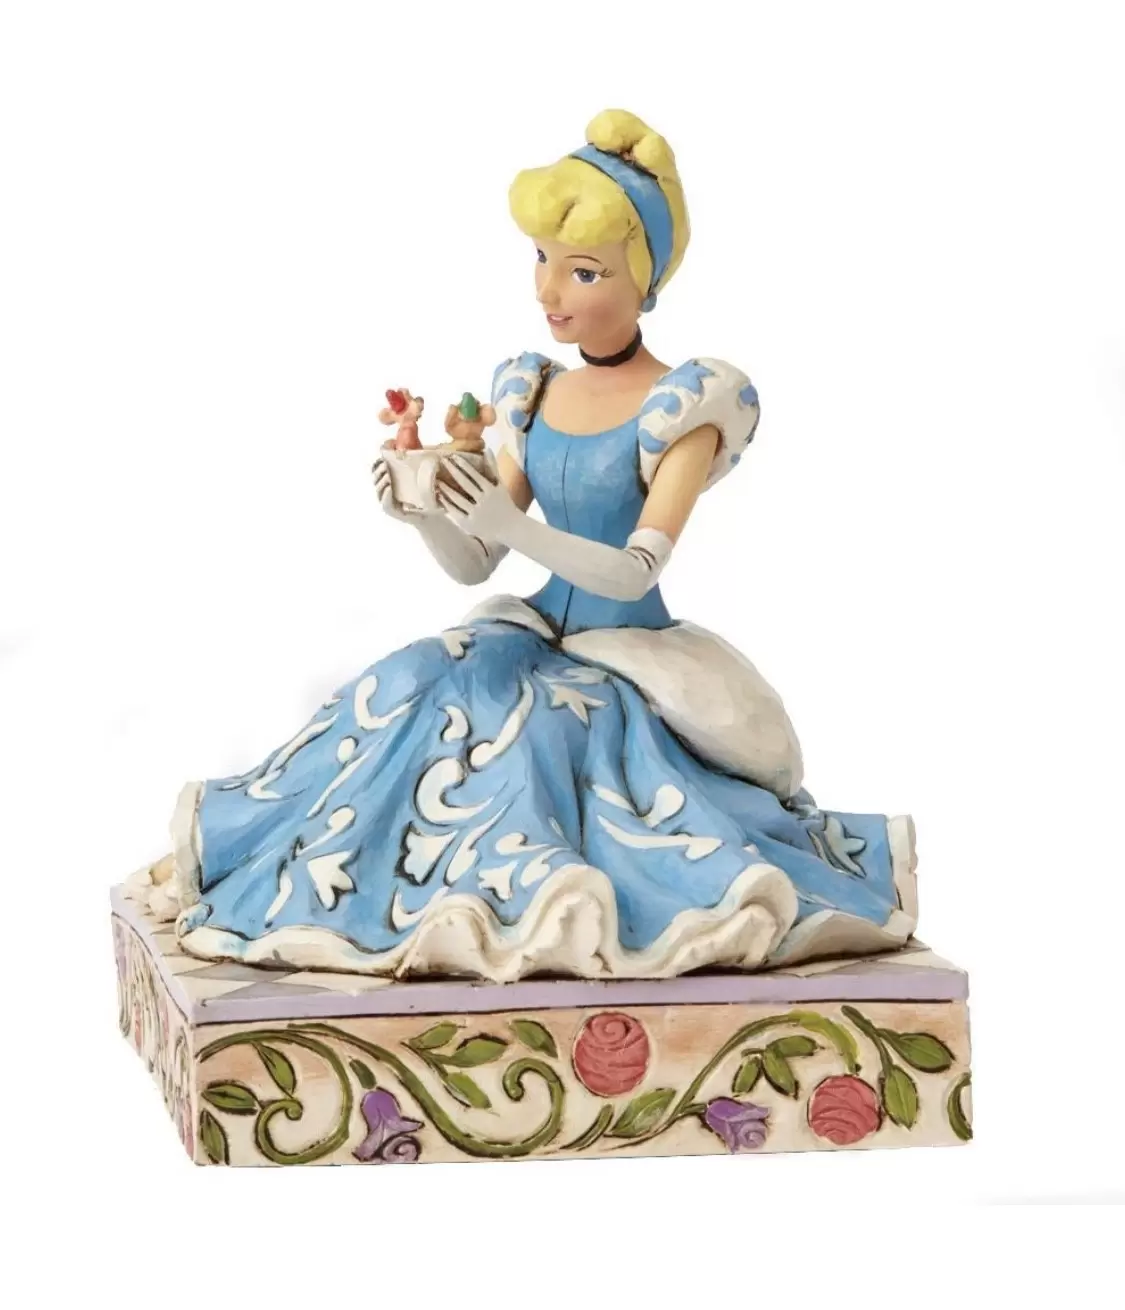 Figurine Disney Enesco Shore Traditions Cinderella 4059739 Jaq 